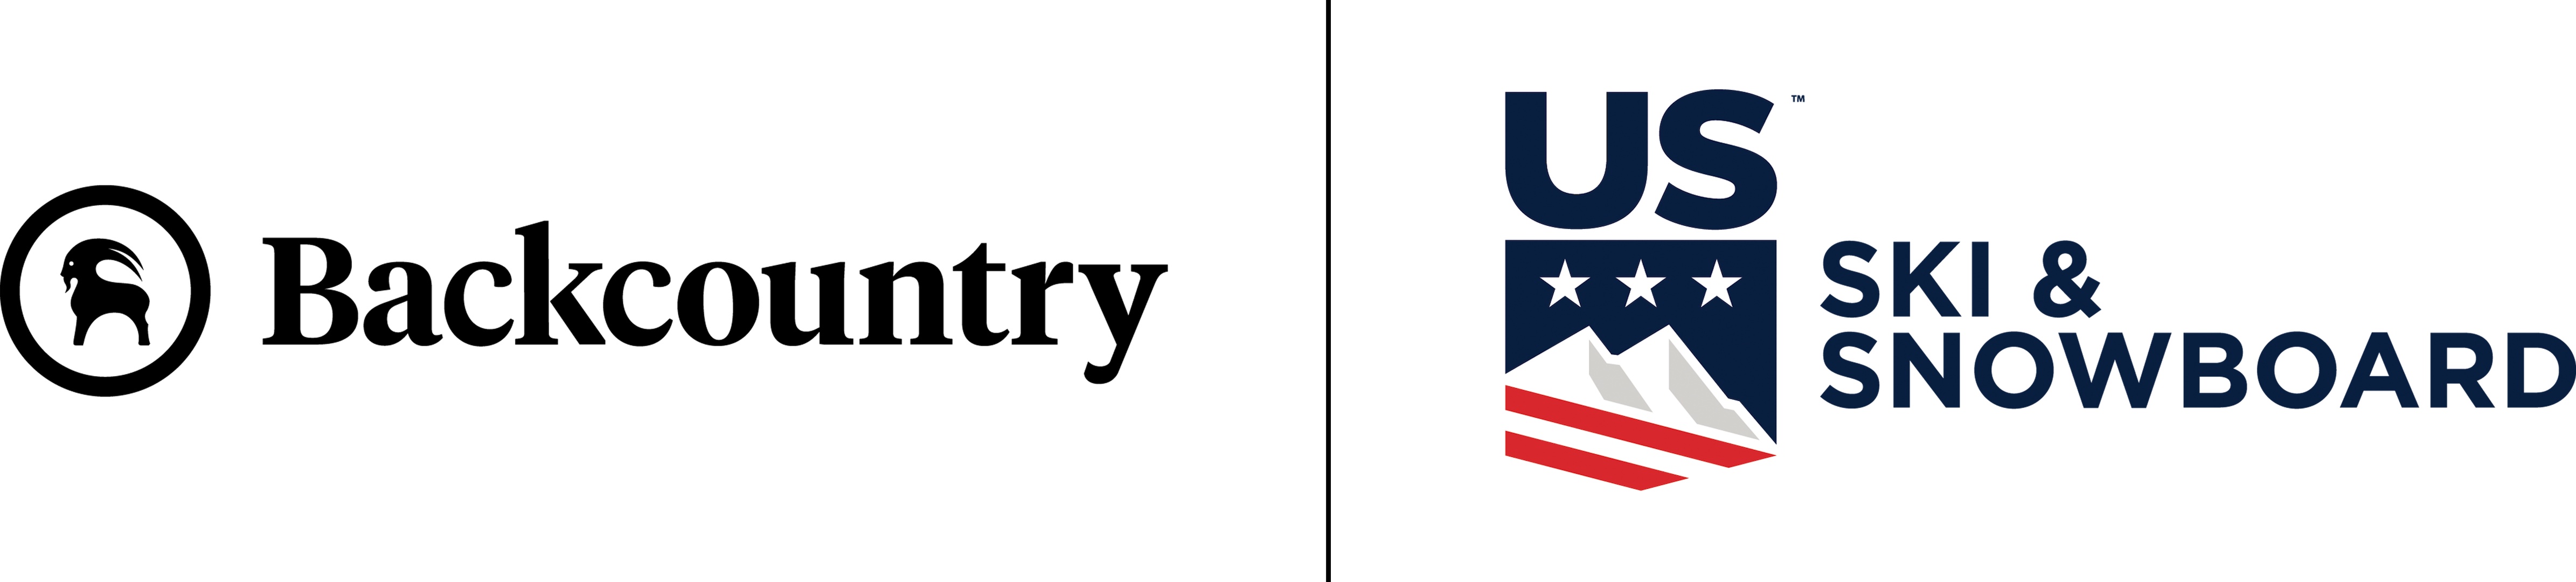 Backcountry and U.S. Ski & Snowboard Logo